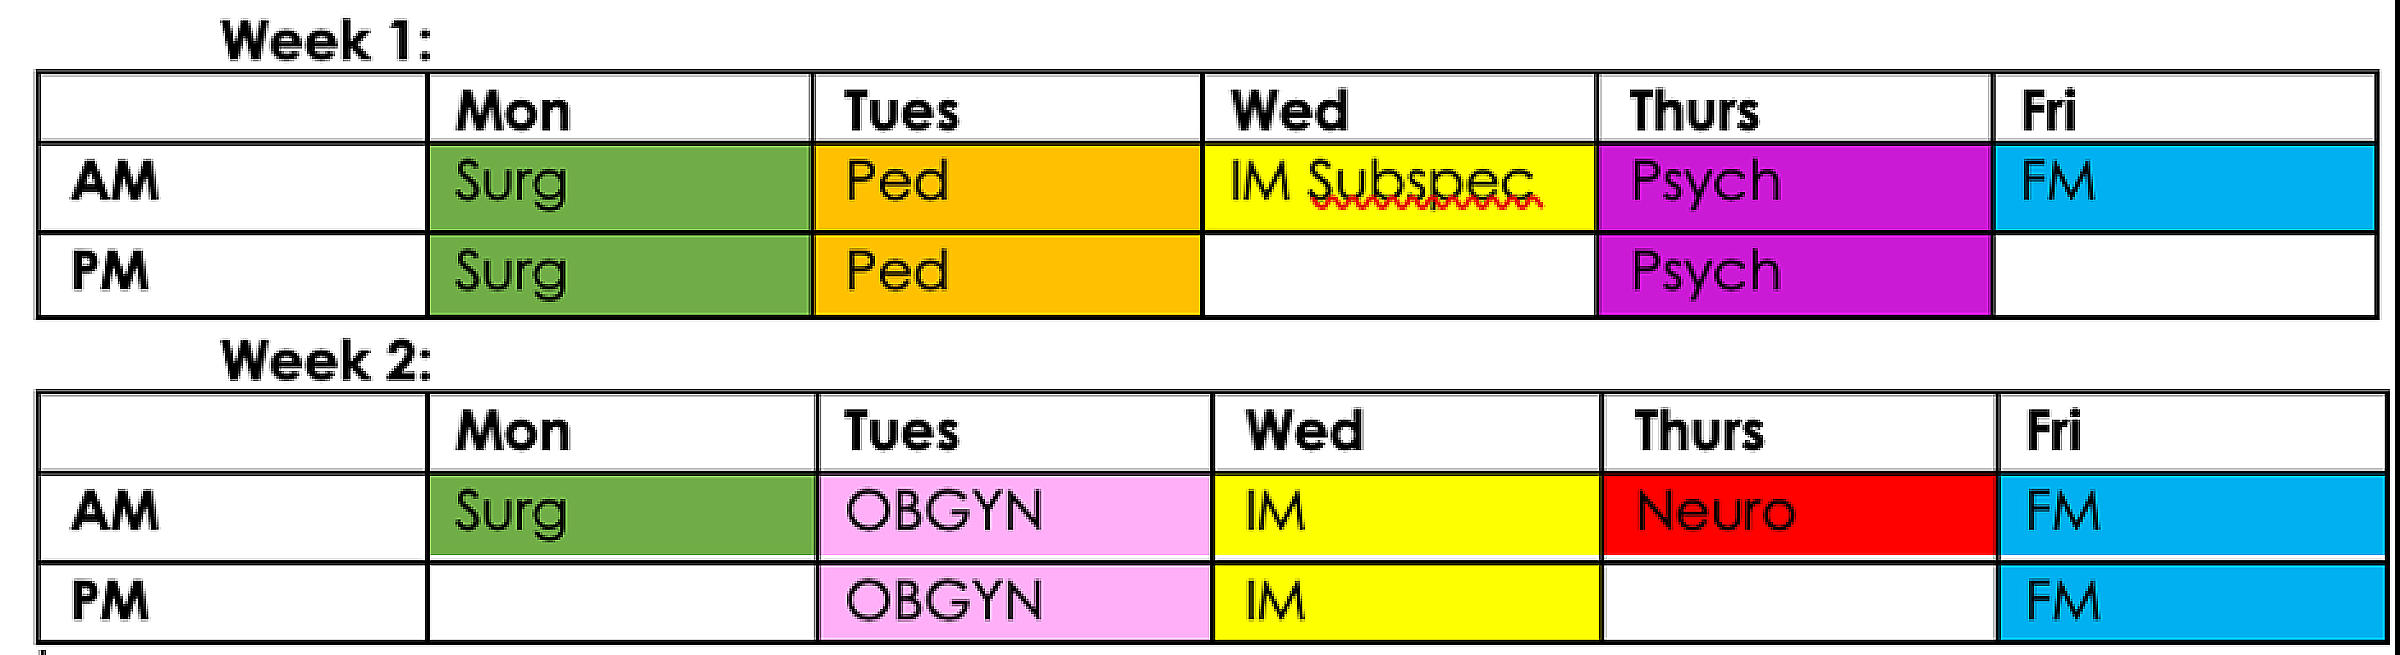 LIC student schedule